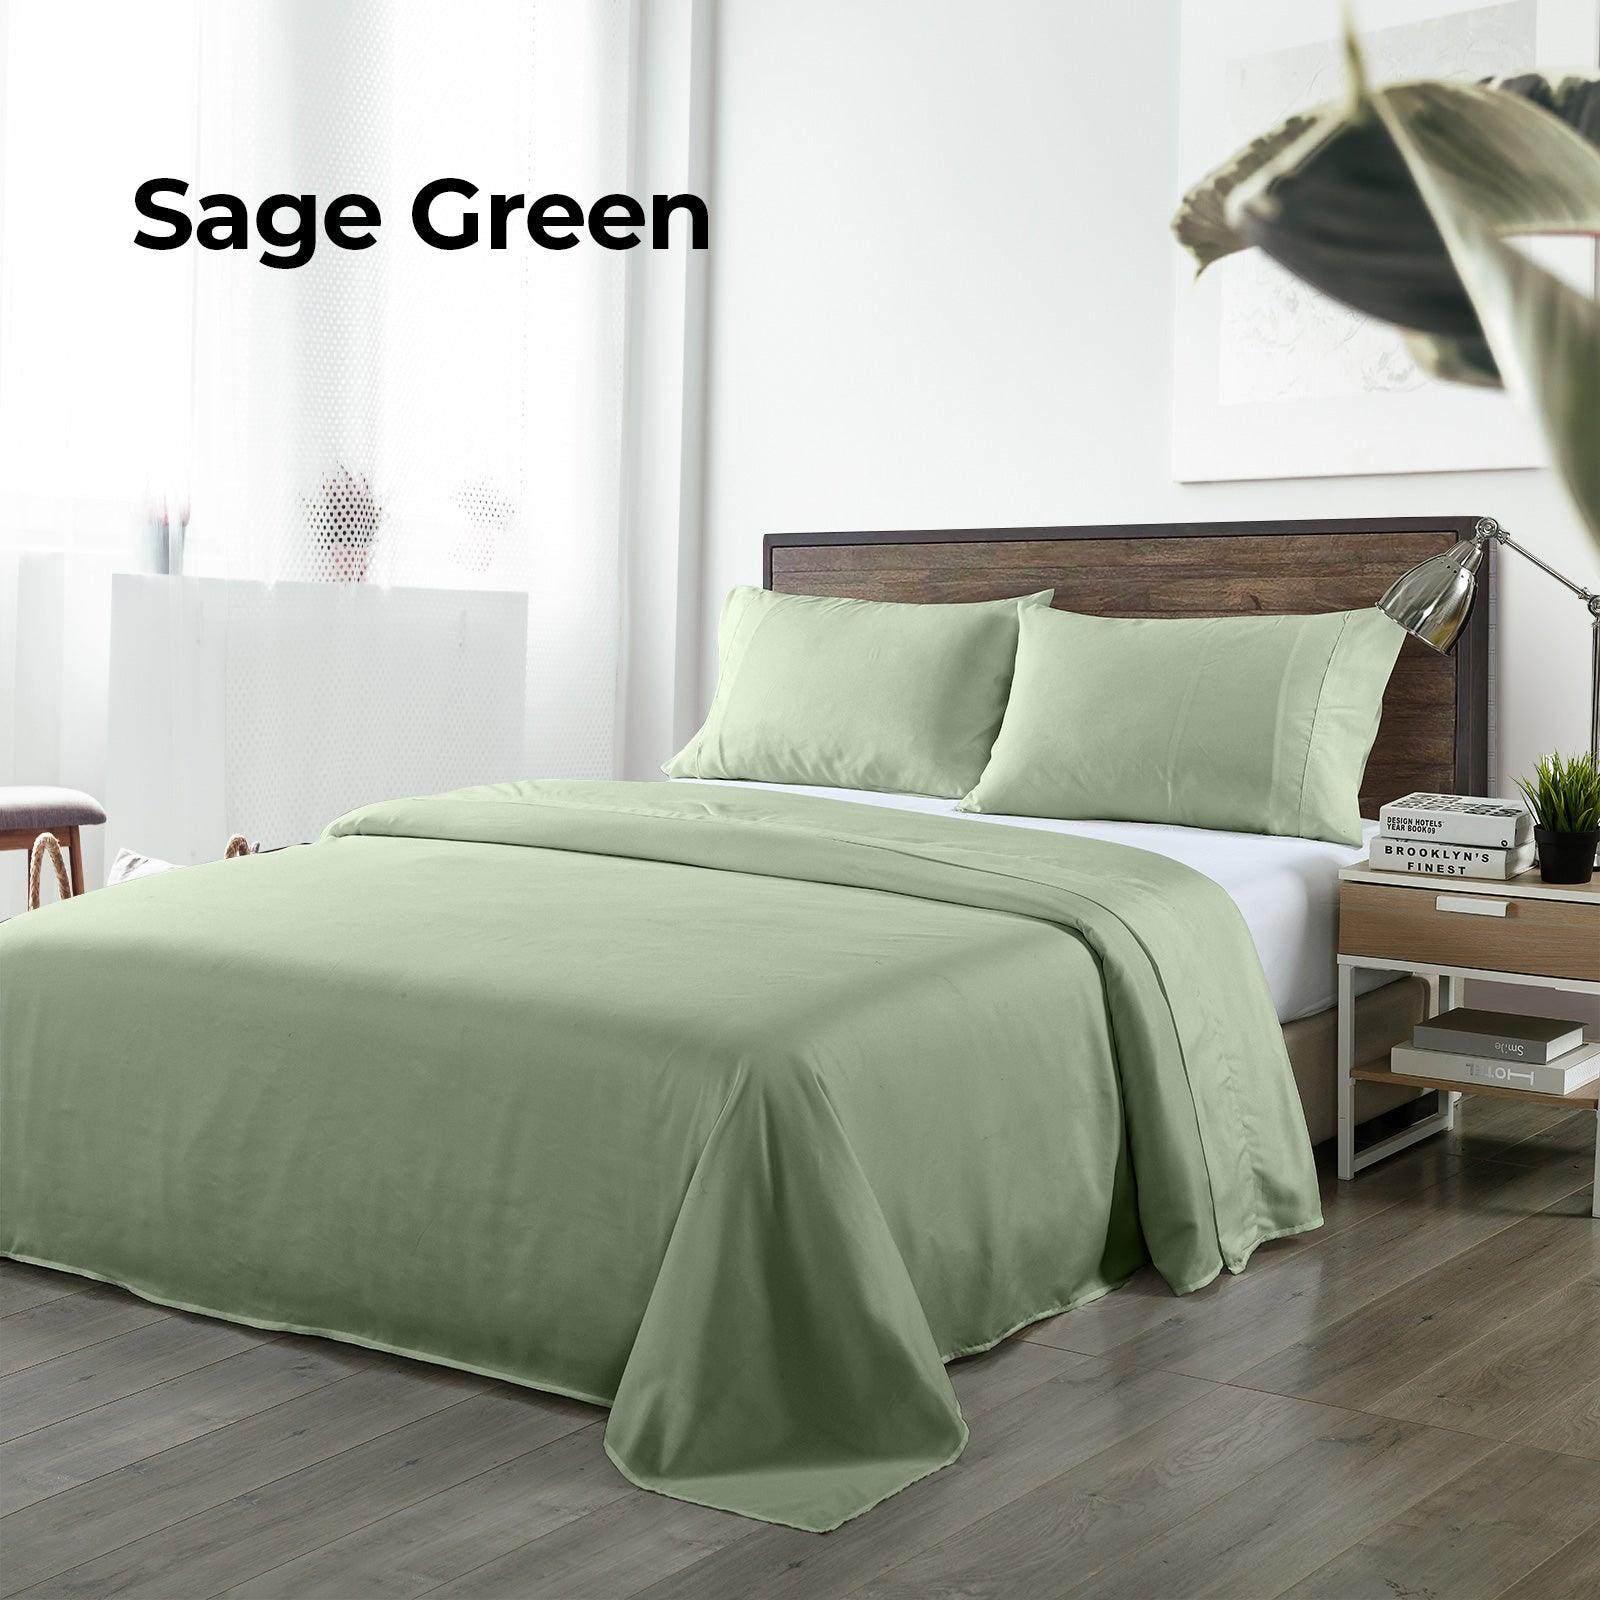 Royal Comfort Bamboo Blended Sheet & Pillowcases Set 1000TC Ultra Soft Bedding - Queen - Sage Green